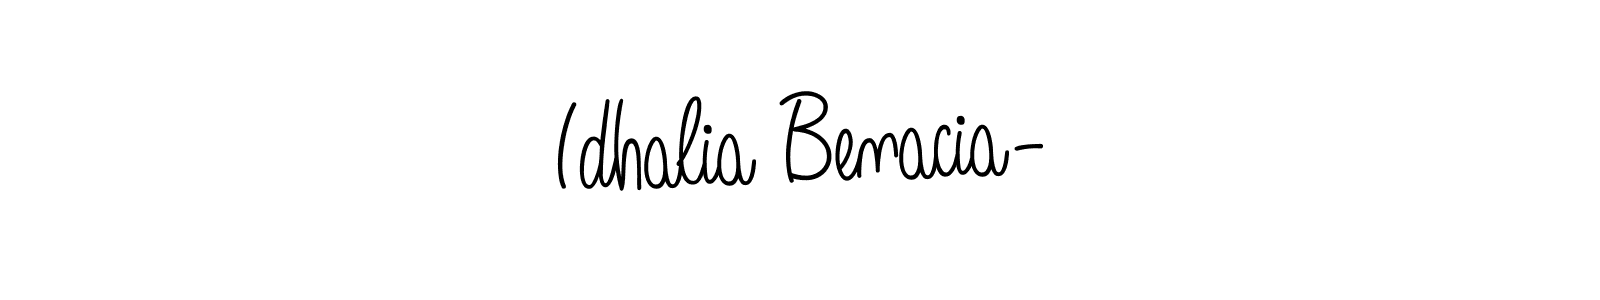 How to make Idhalia Benacia- signature? Angelique-Rose-font-FFP is a professional autograph style. Create handwritten signature for Idhalia Benacia- name. Idhalia Benacia- signature style 5 images and pictures png